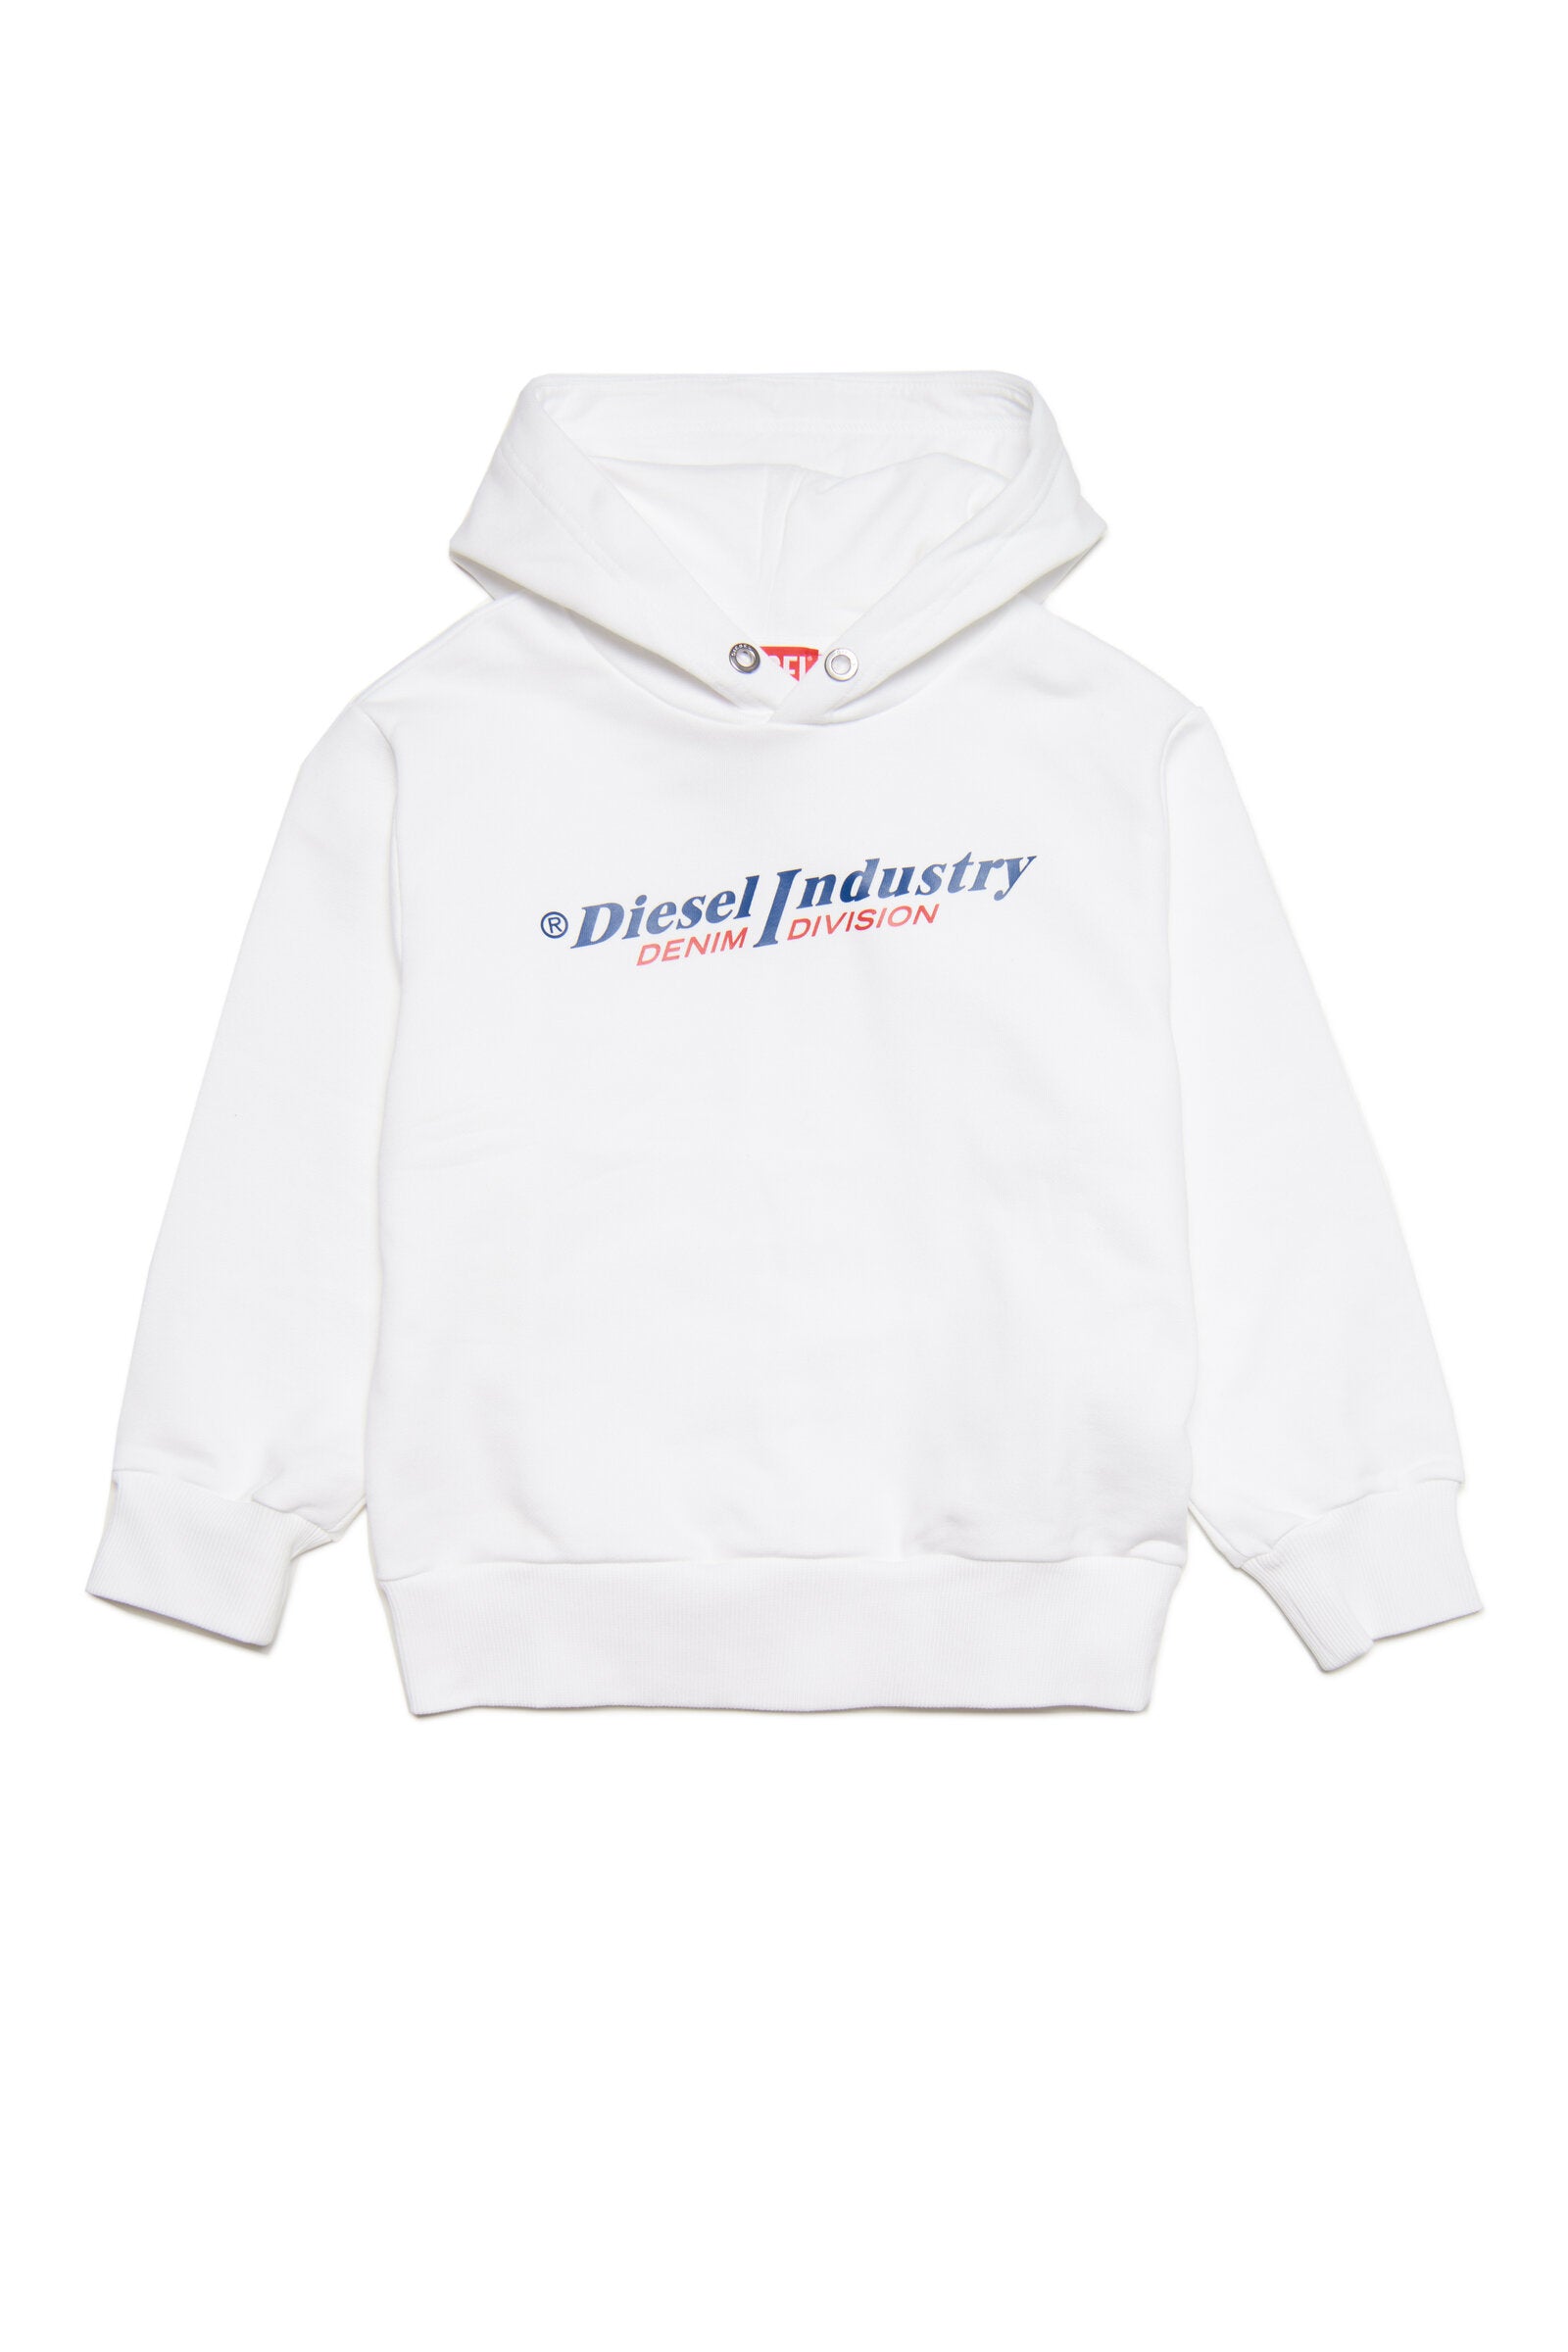 White hooded sweatshirt with "Diesel industry, Denim Division" logo